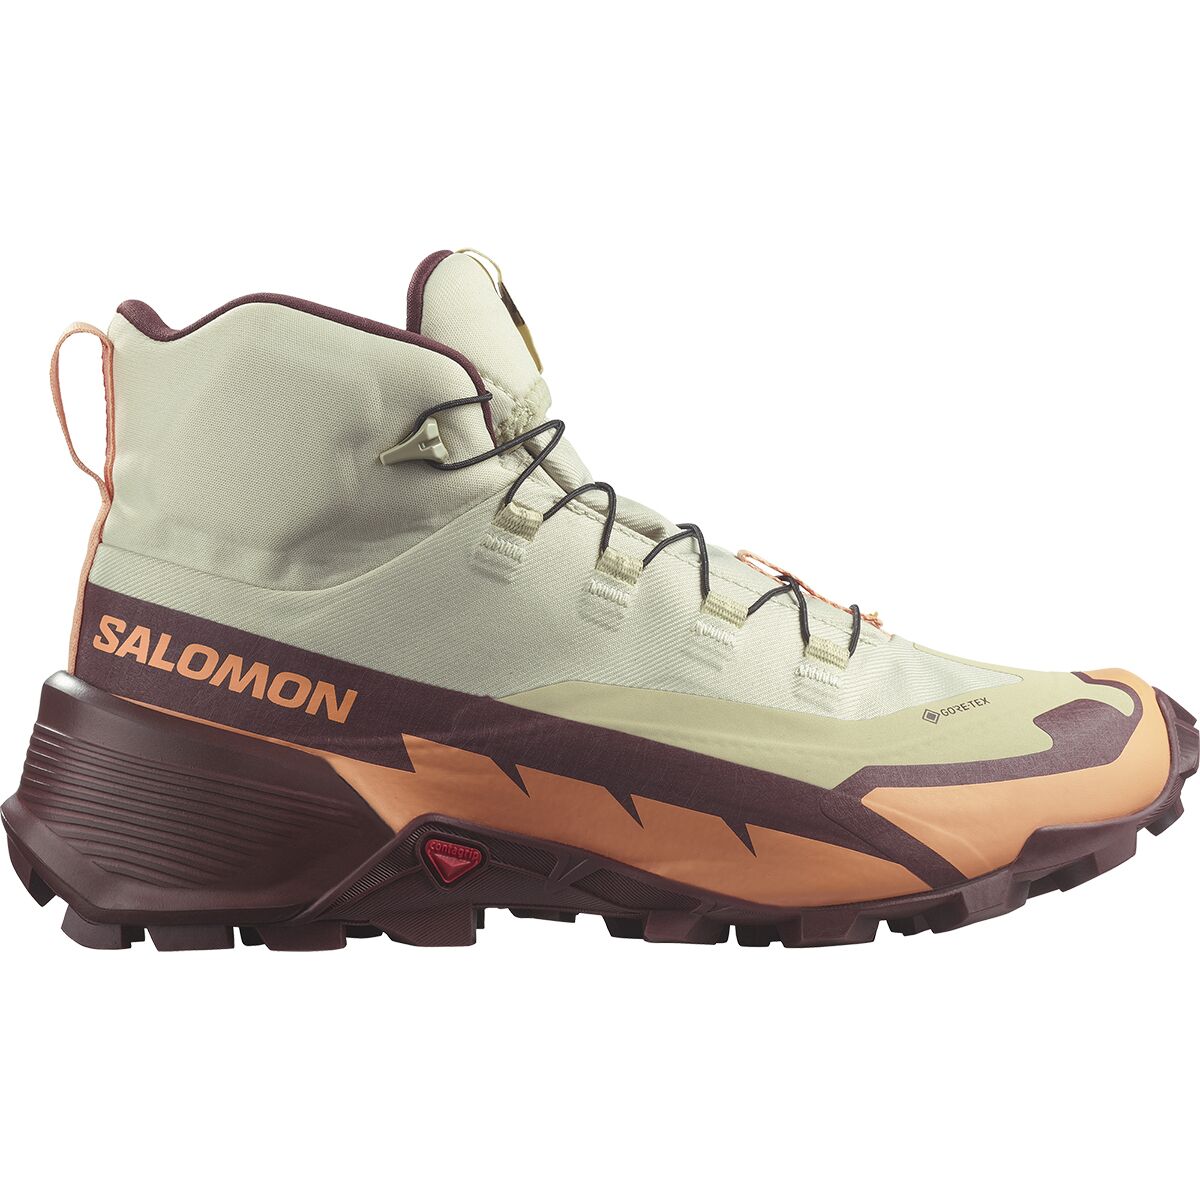 Salomon Cross Hike 2 Mid GTX Boot - Women's Alfalfa/Cantaloupe/Bitter Chocolate US 10.0/UK 8.5